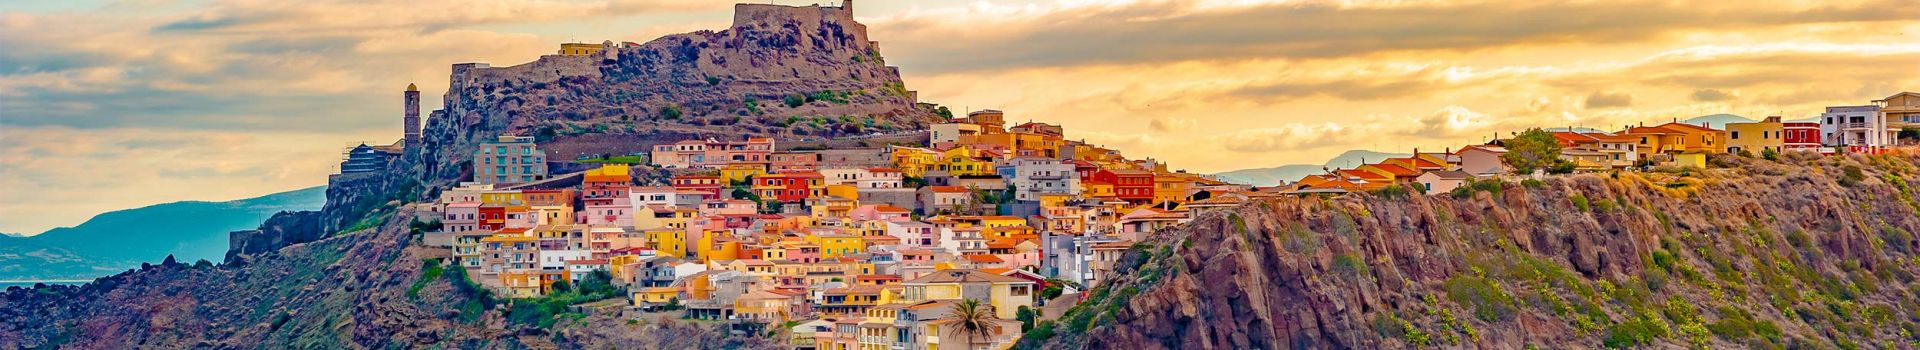 Holidays to Sardinia | Book Flights & Hotel | Cassidy Travel